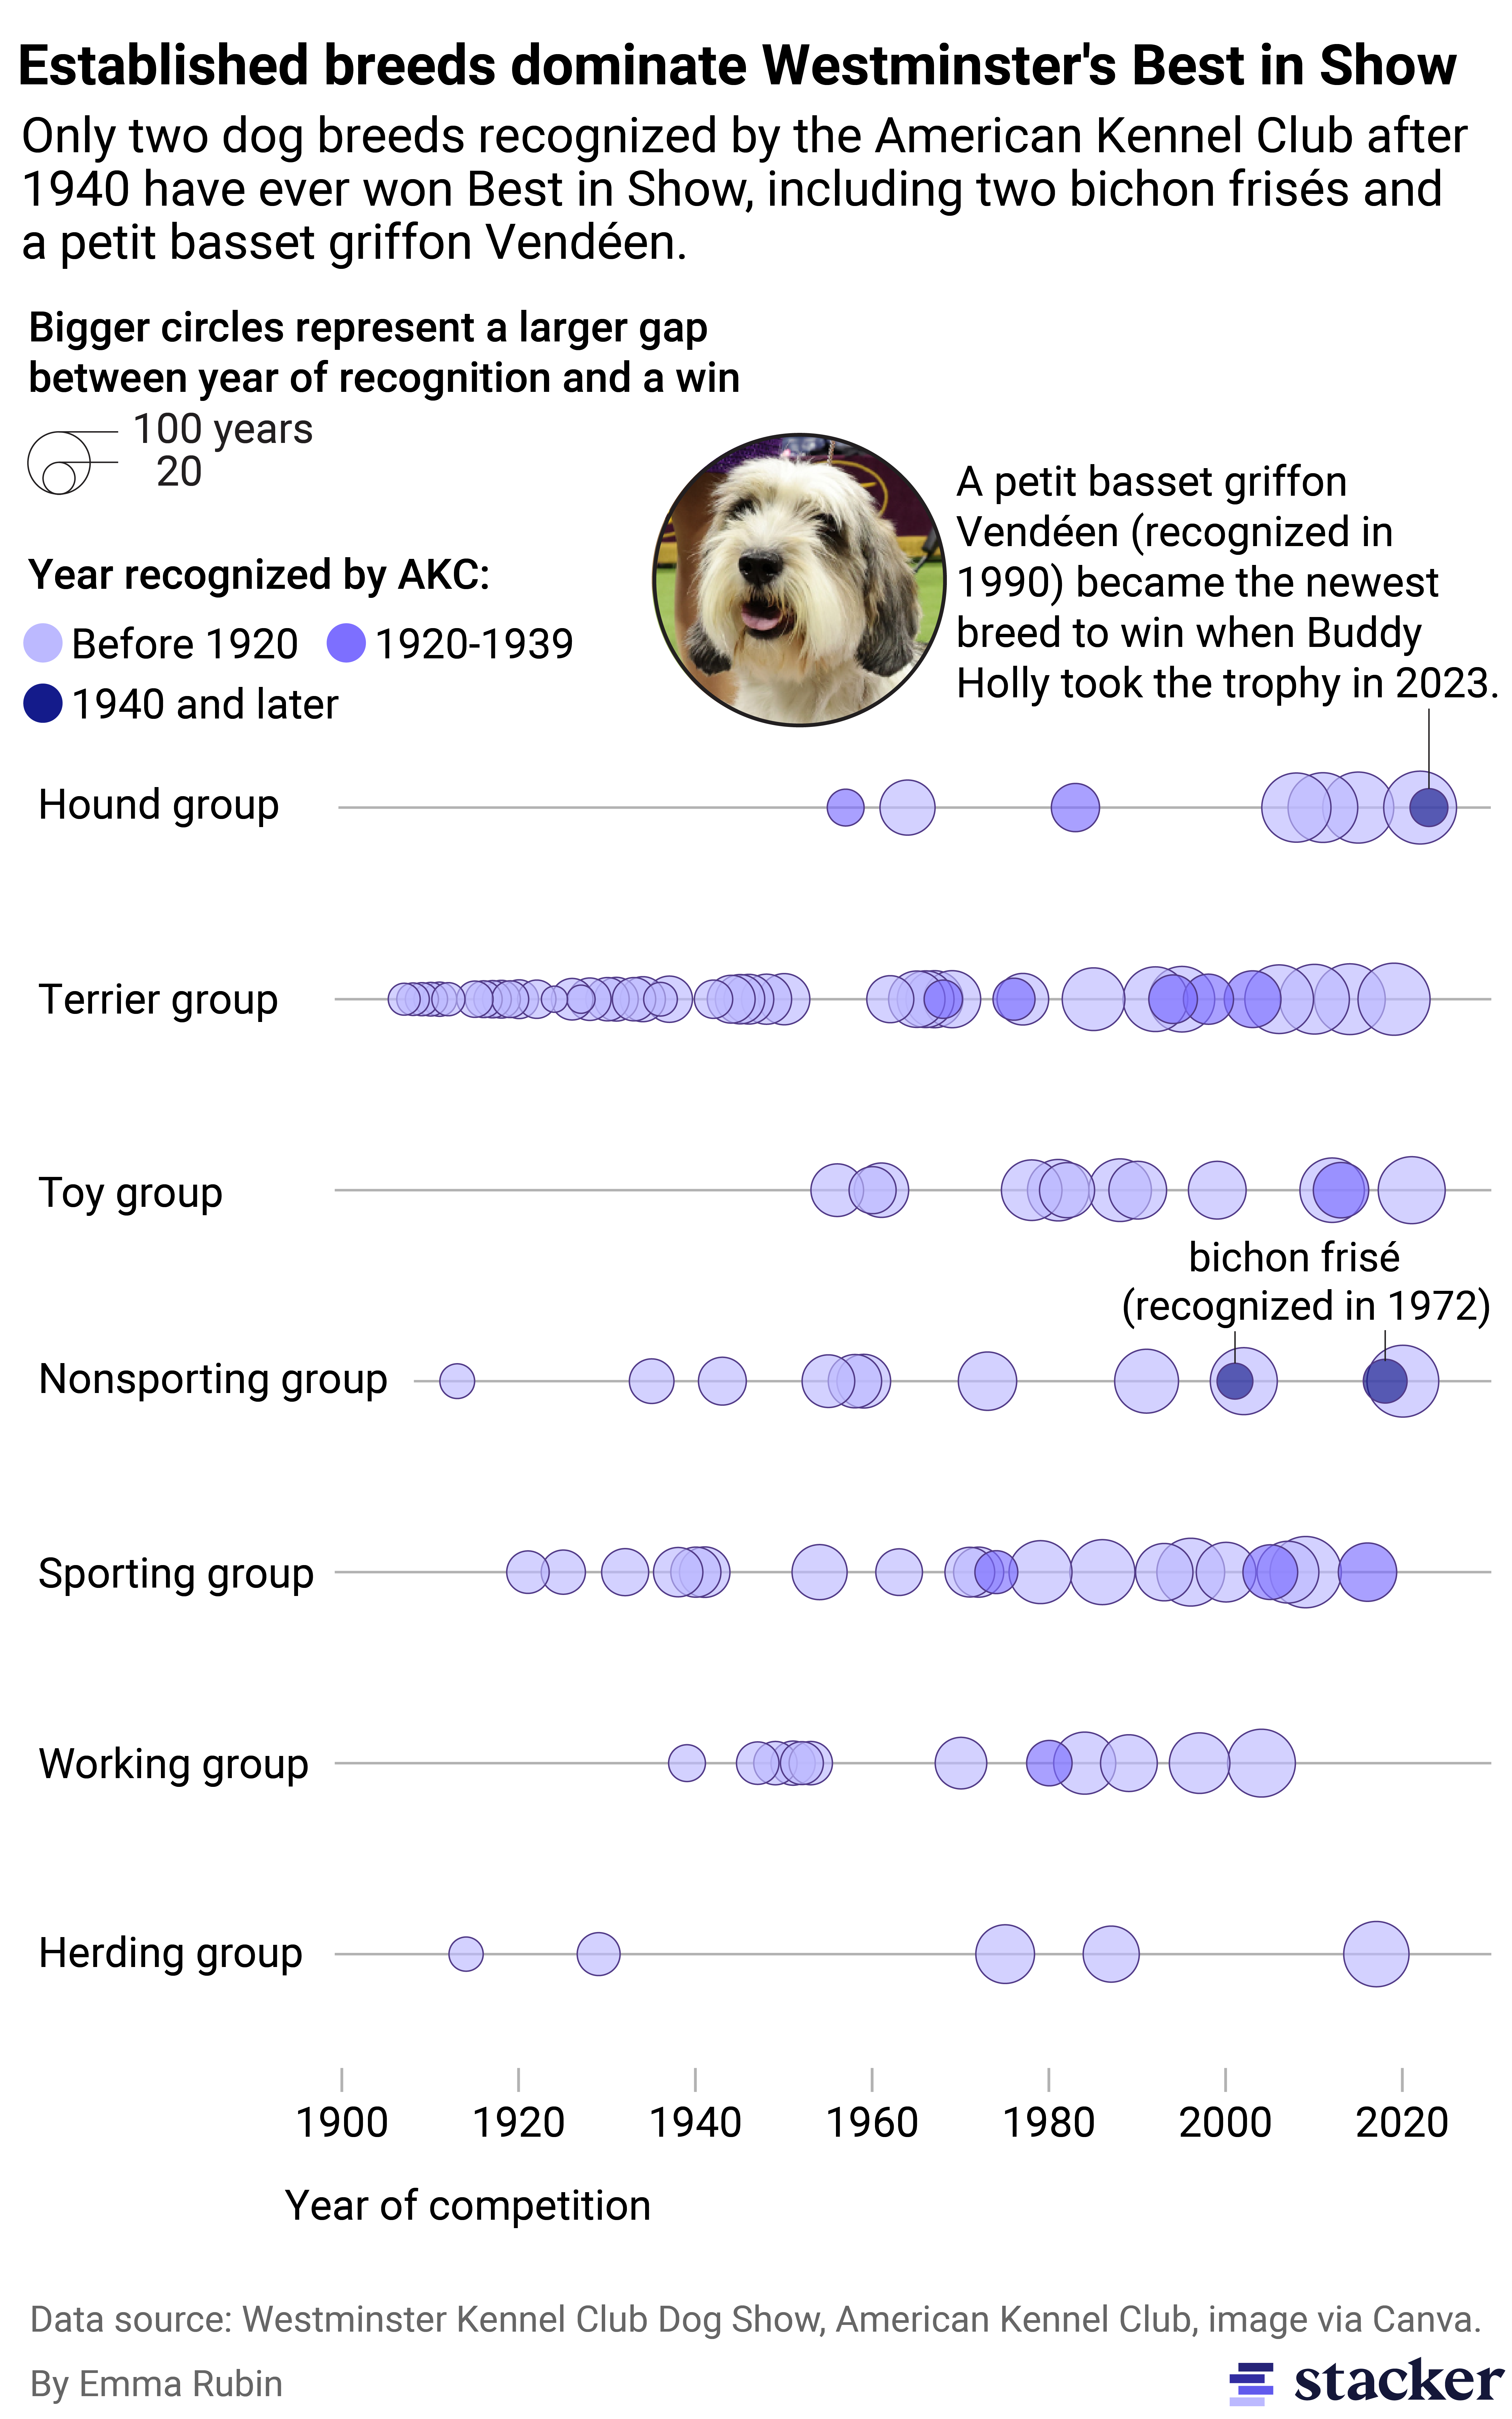 A bubble plot showing established breeds dominate Westminster